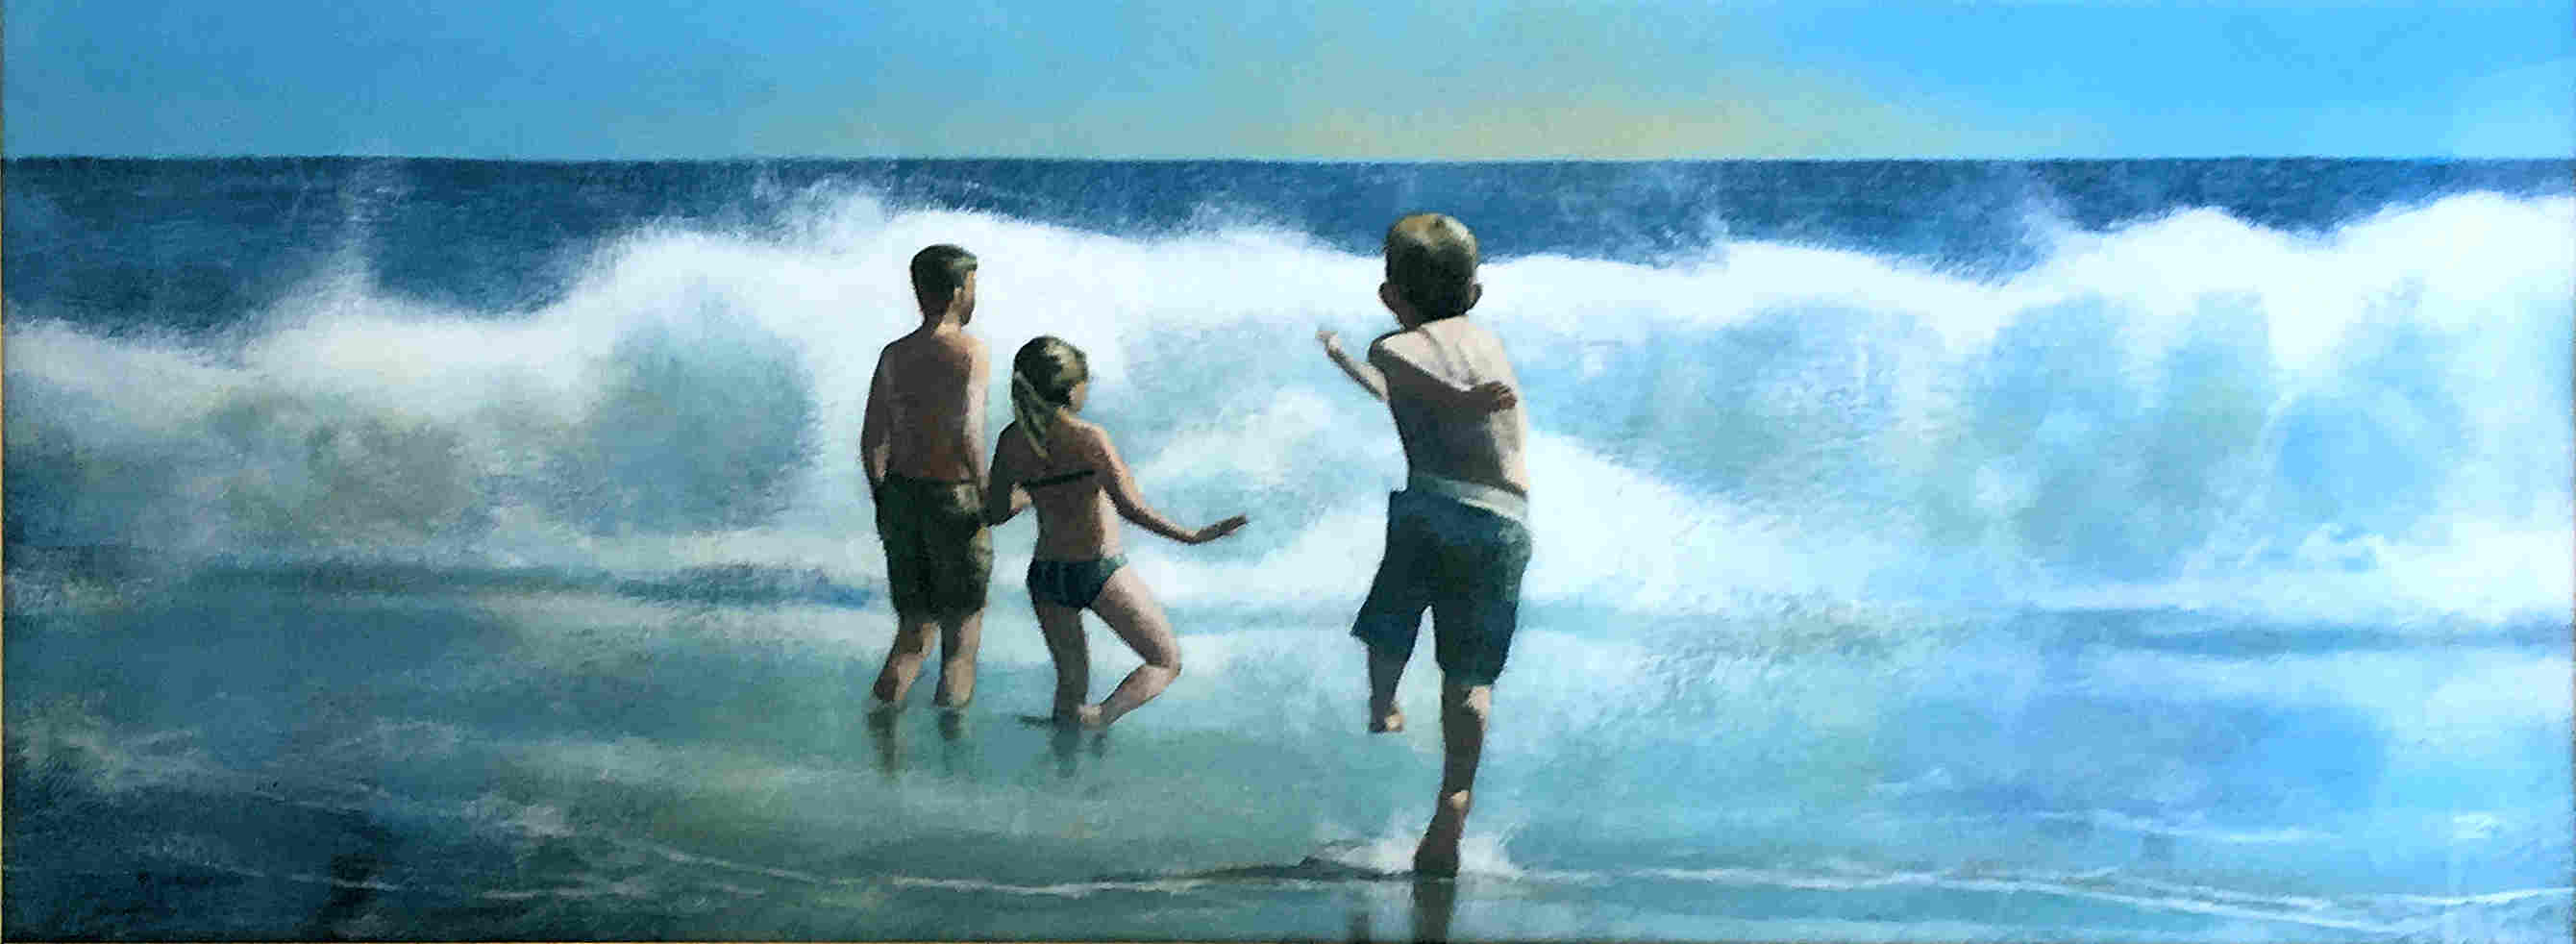 'A Californian Wave' by artist Peter Nardini